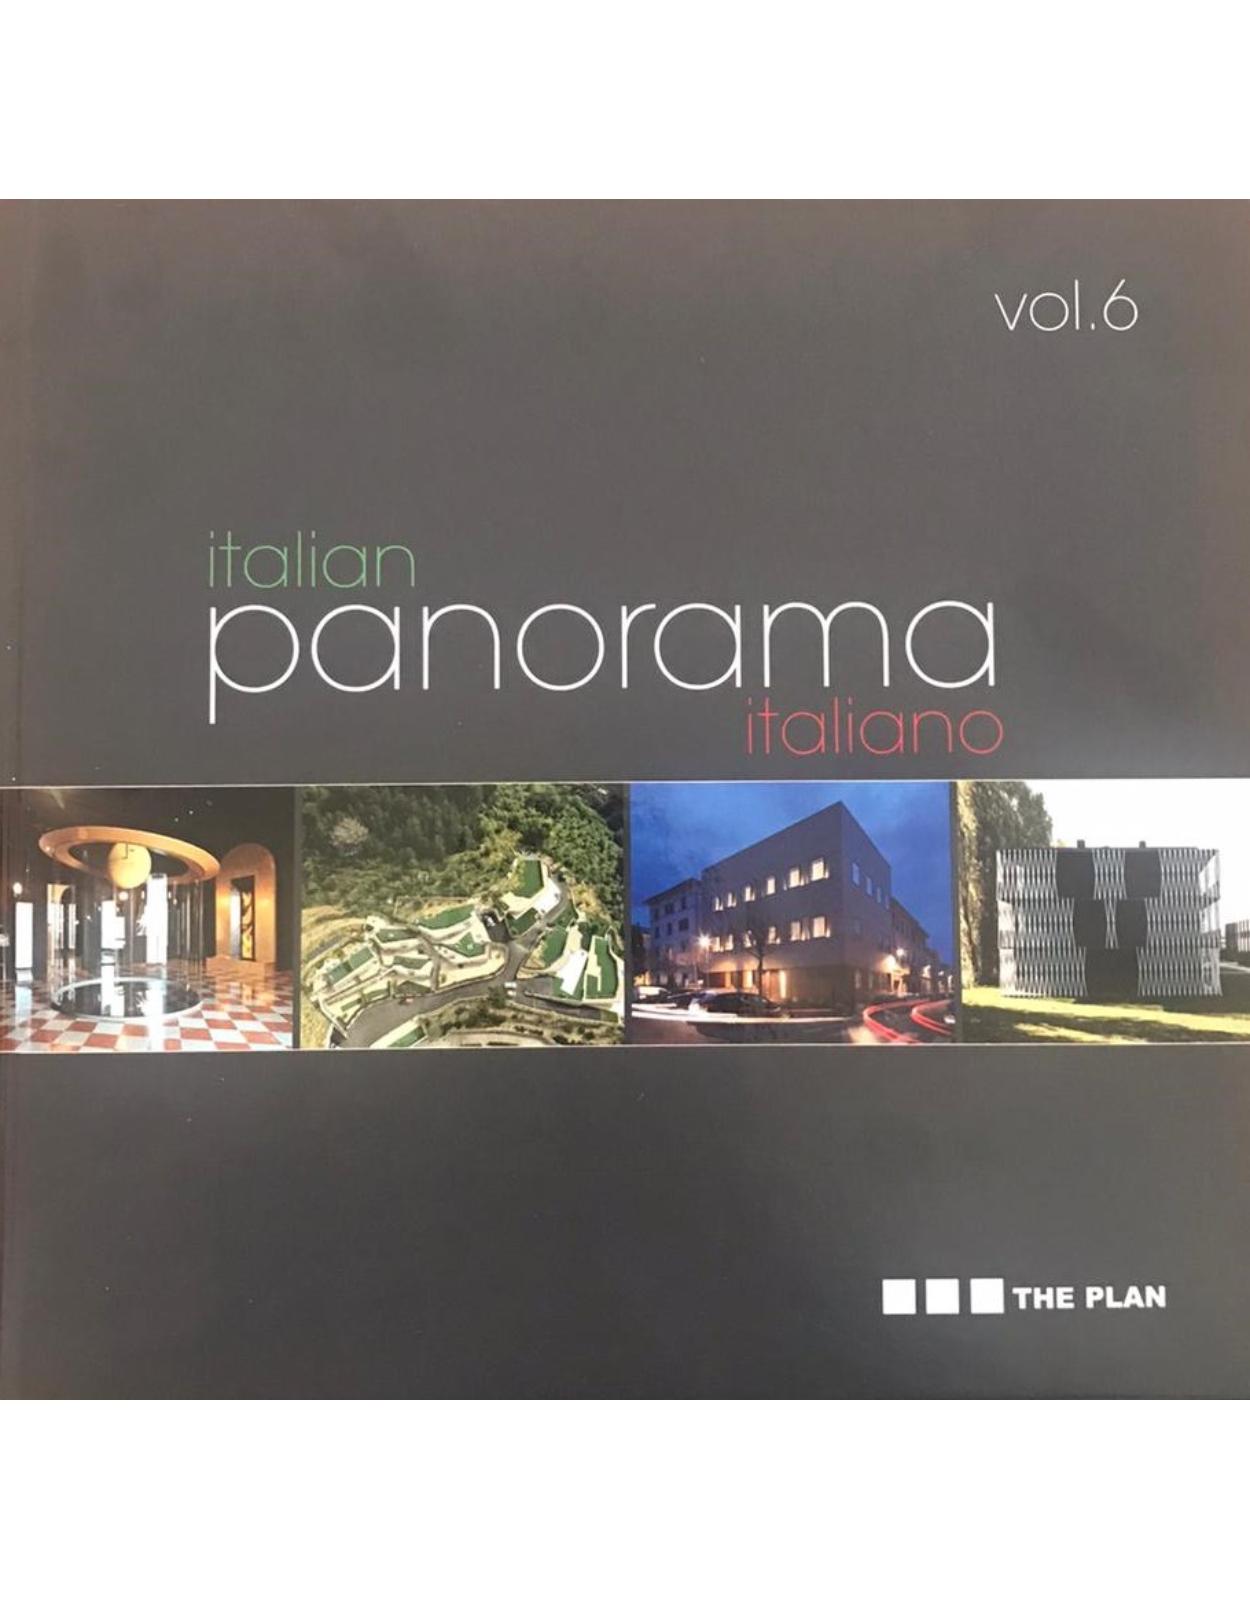 Italian panorama italiano vol.6